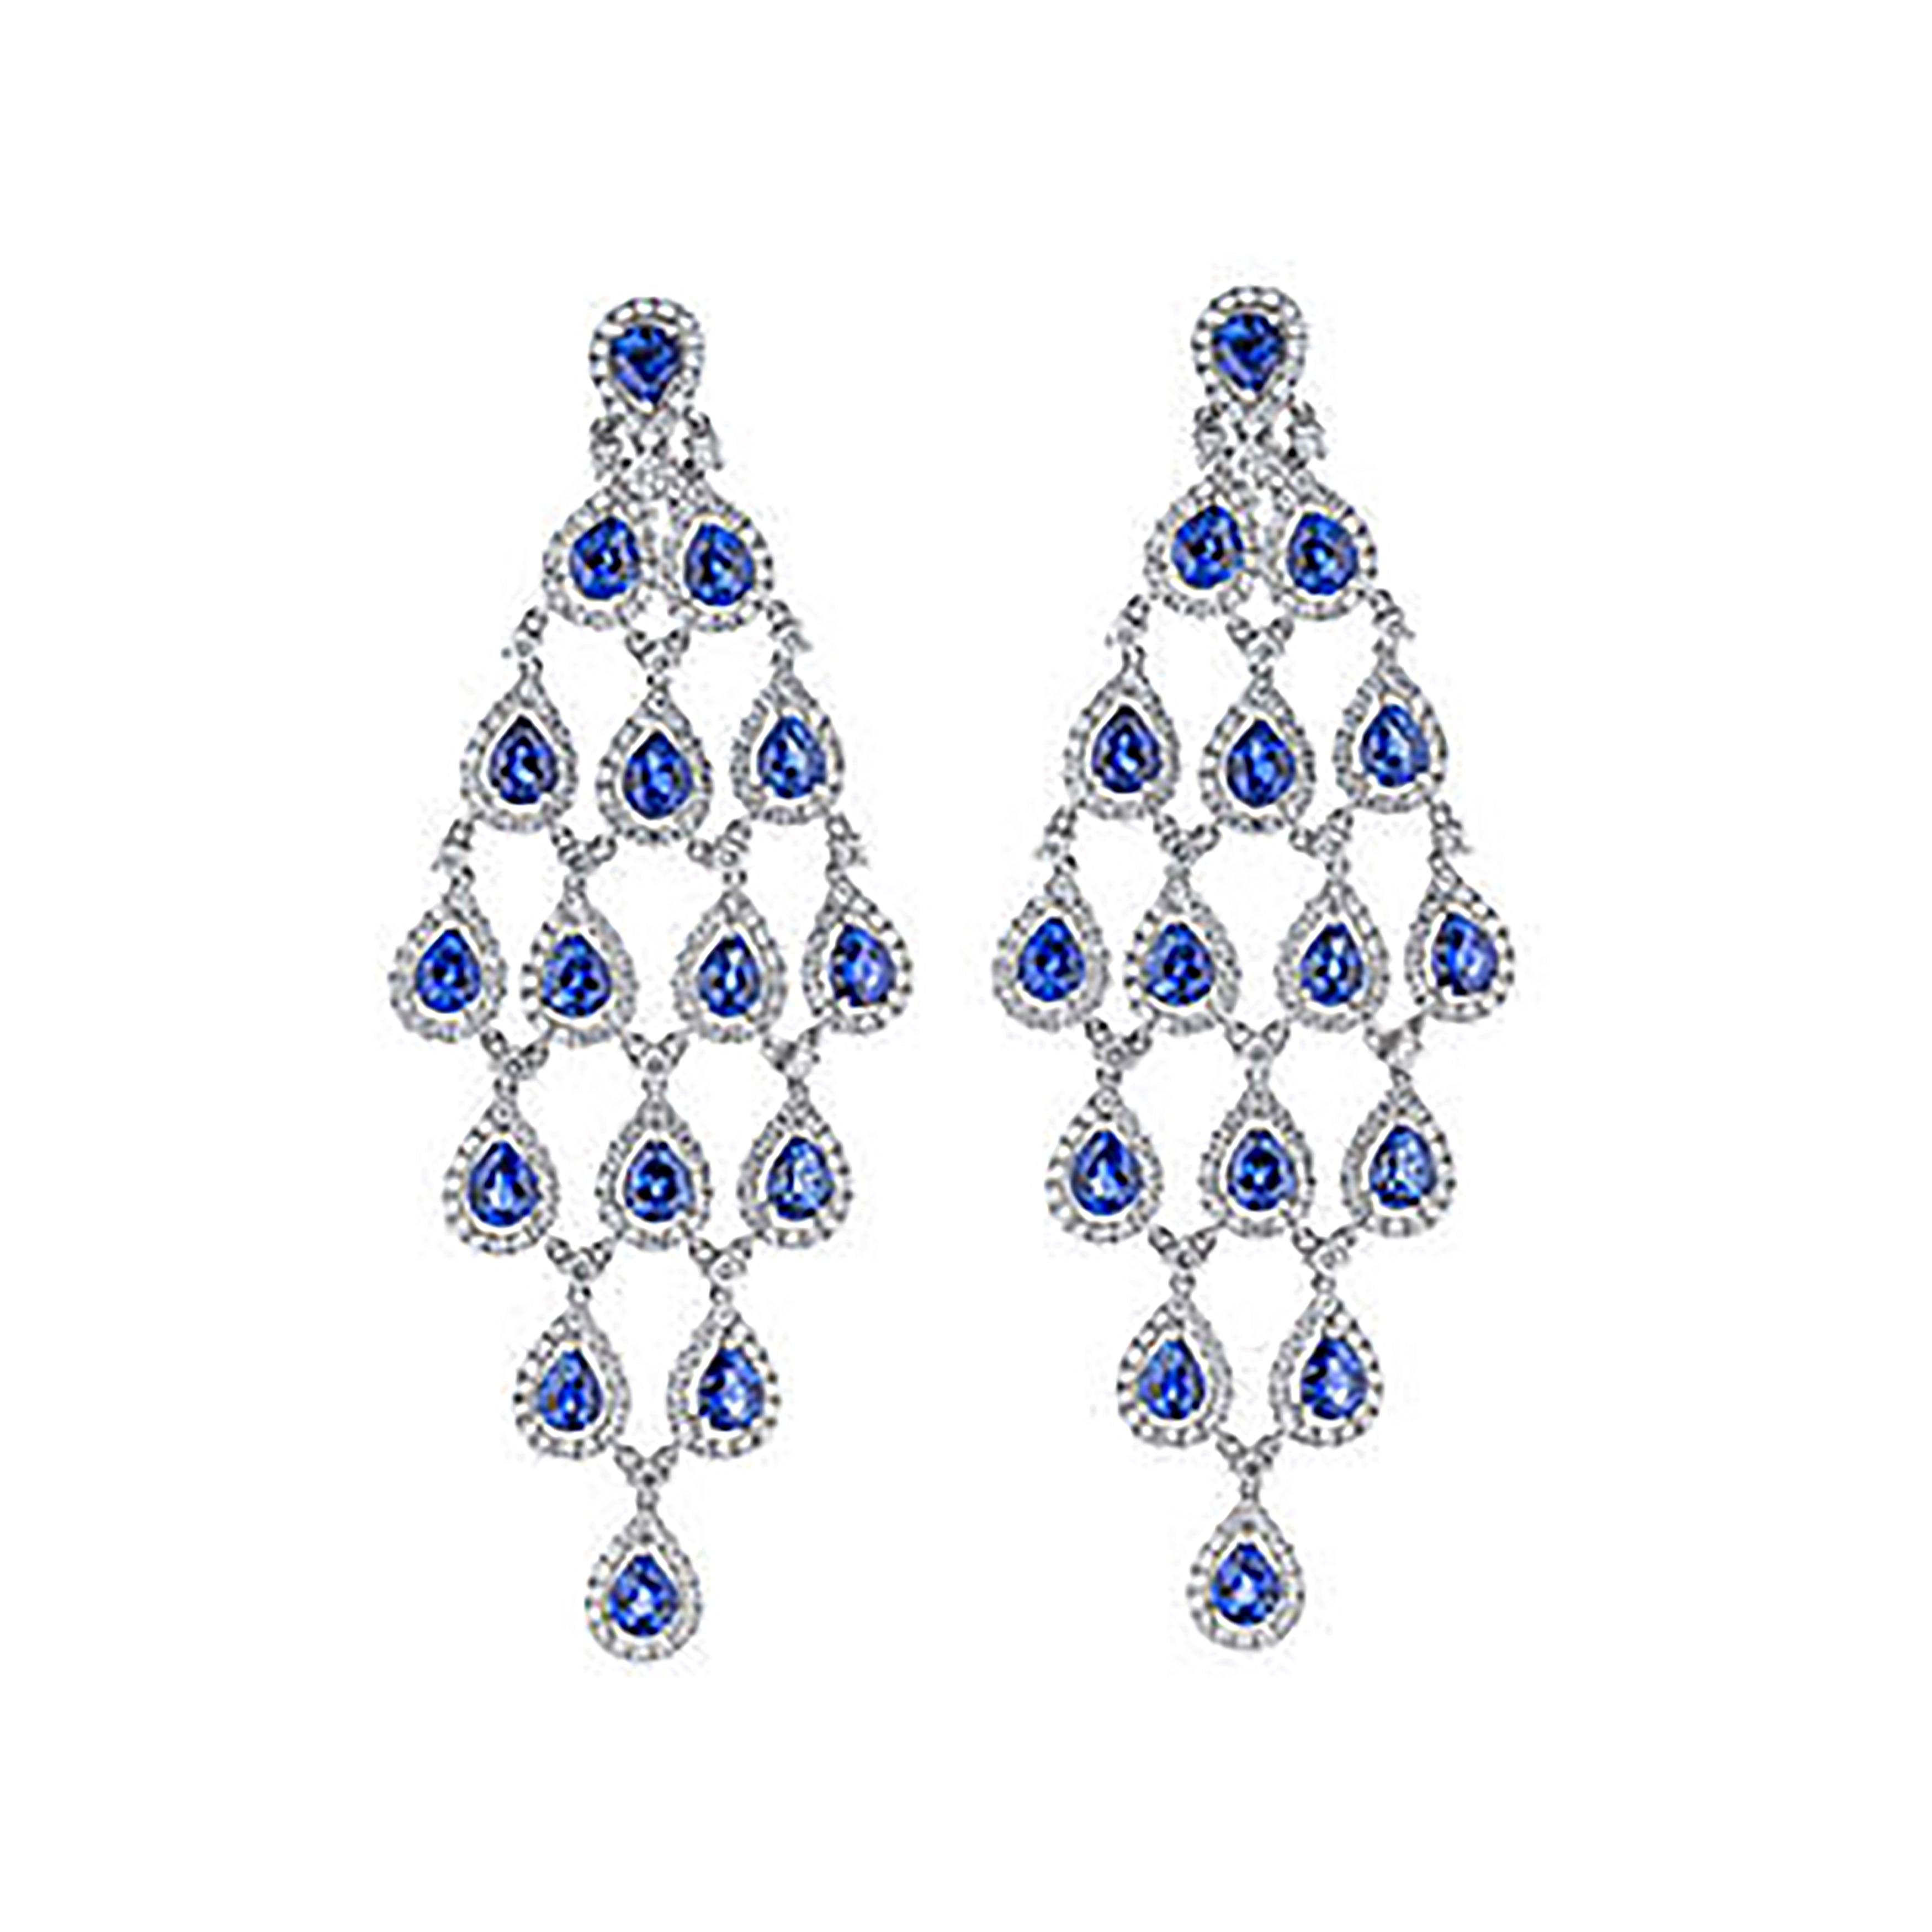 Details more than 243 diamond chandelier earrings best